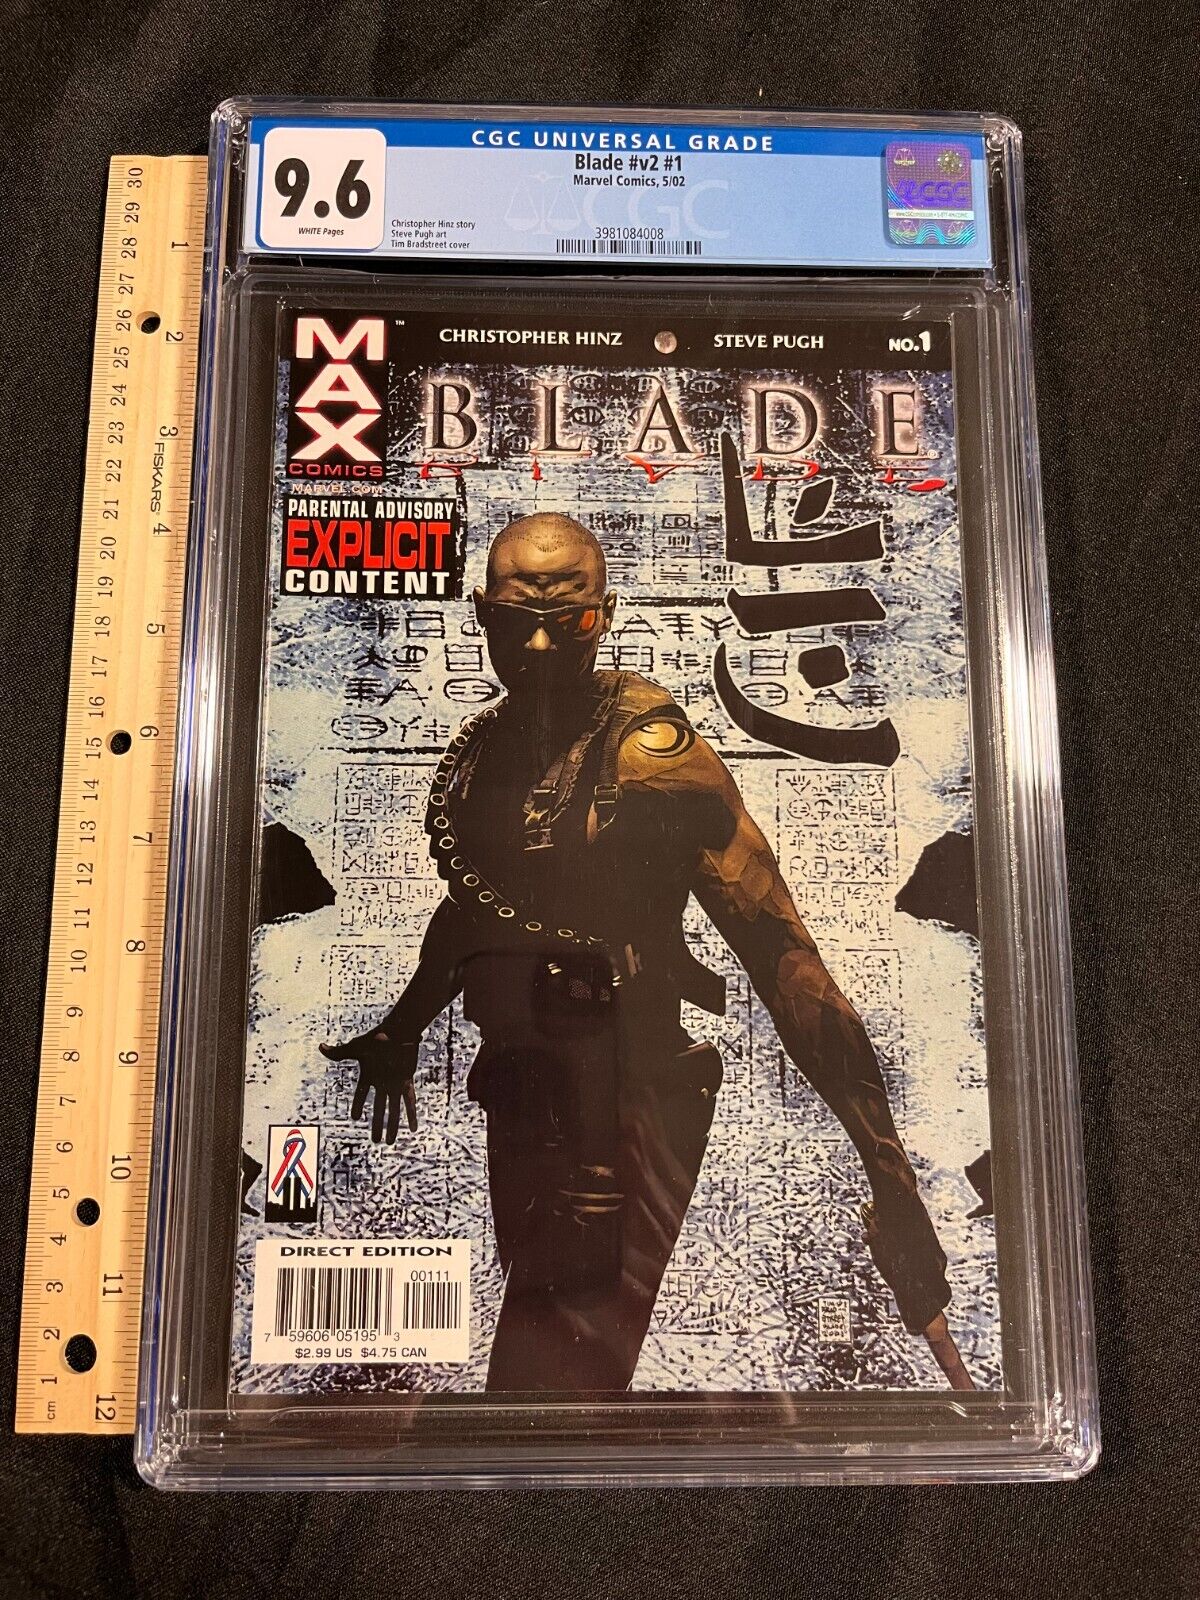 2002 May Issue #1 Marvel Comics Blade Graded CGC 9.6 AA 1624